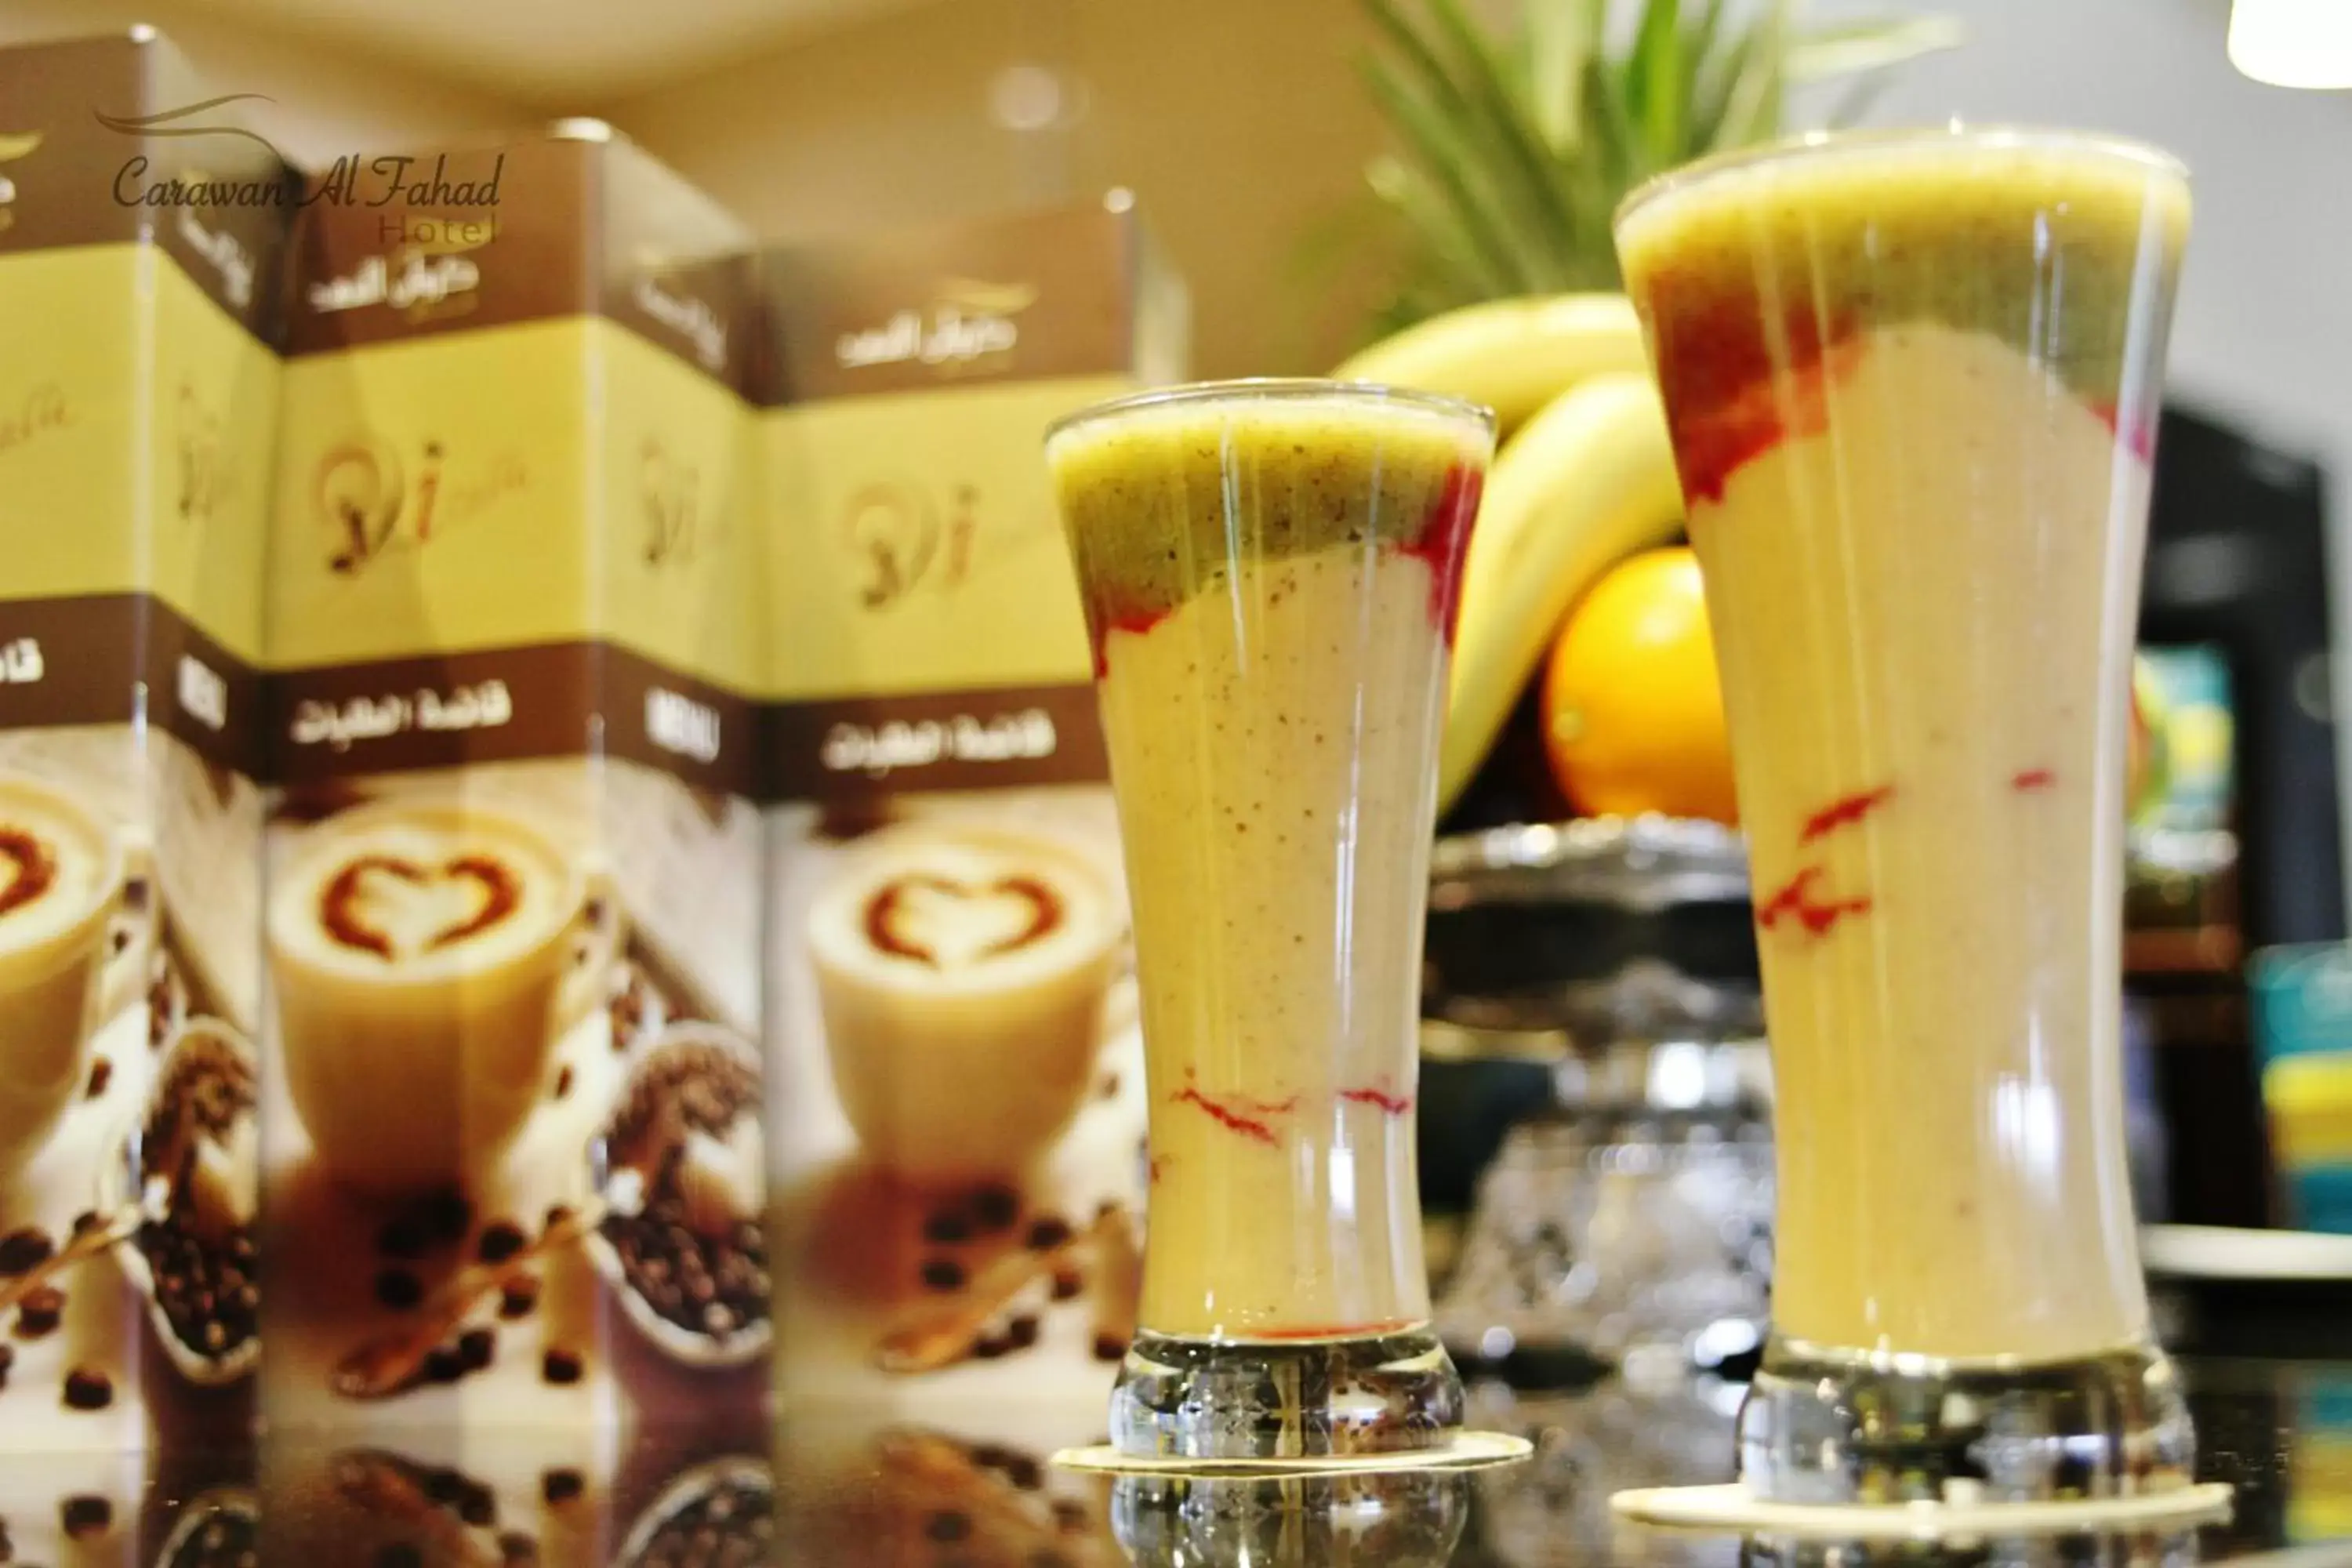 Drinks in Carawan Al Fahad Hotel